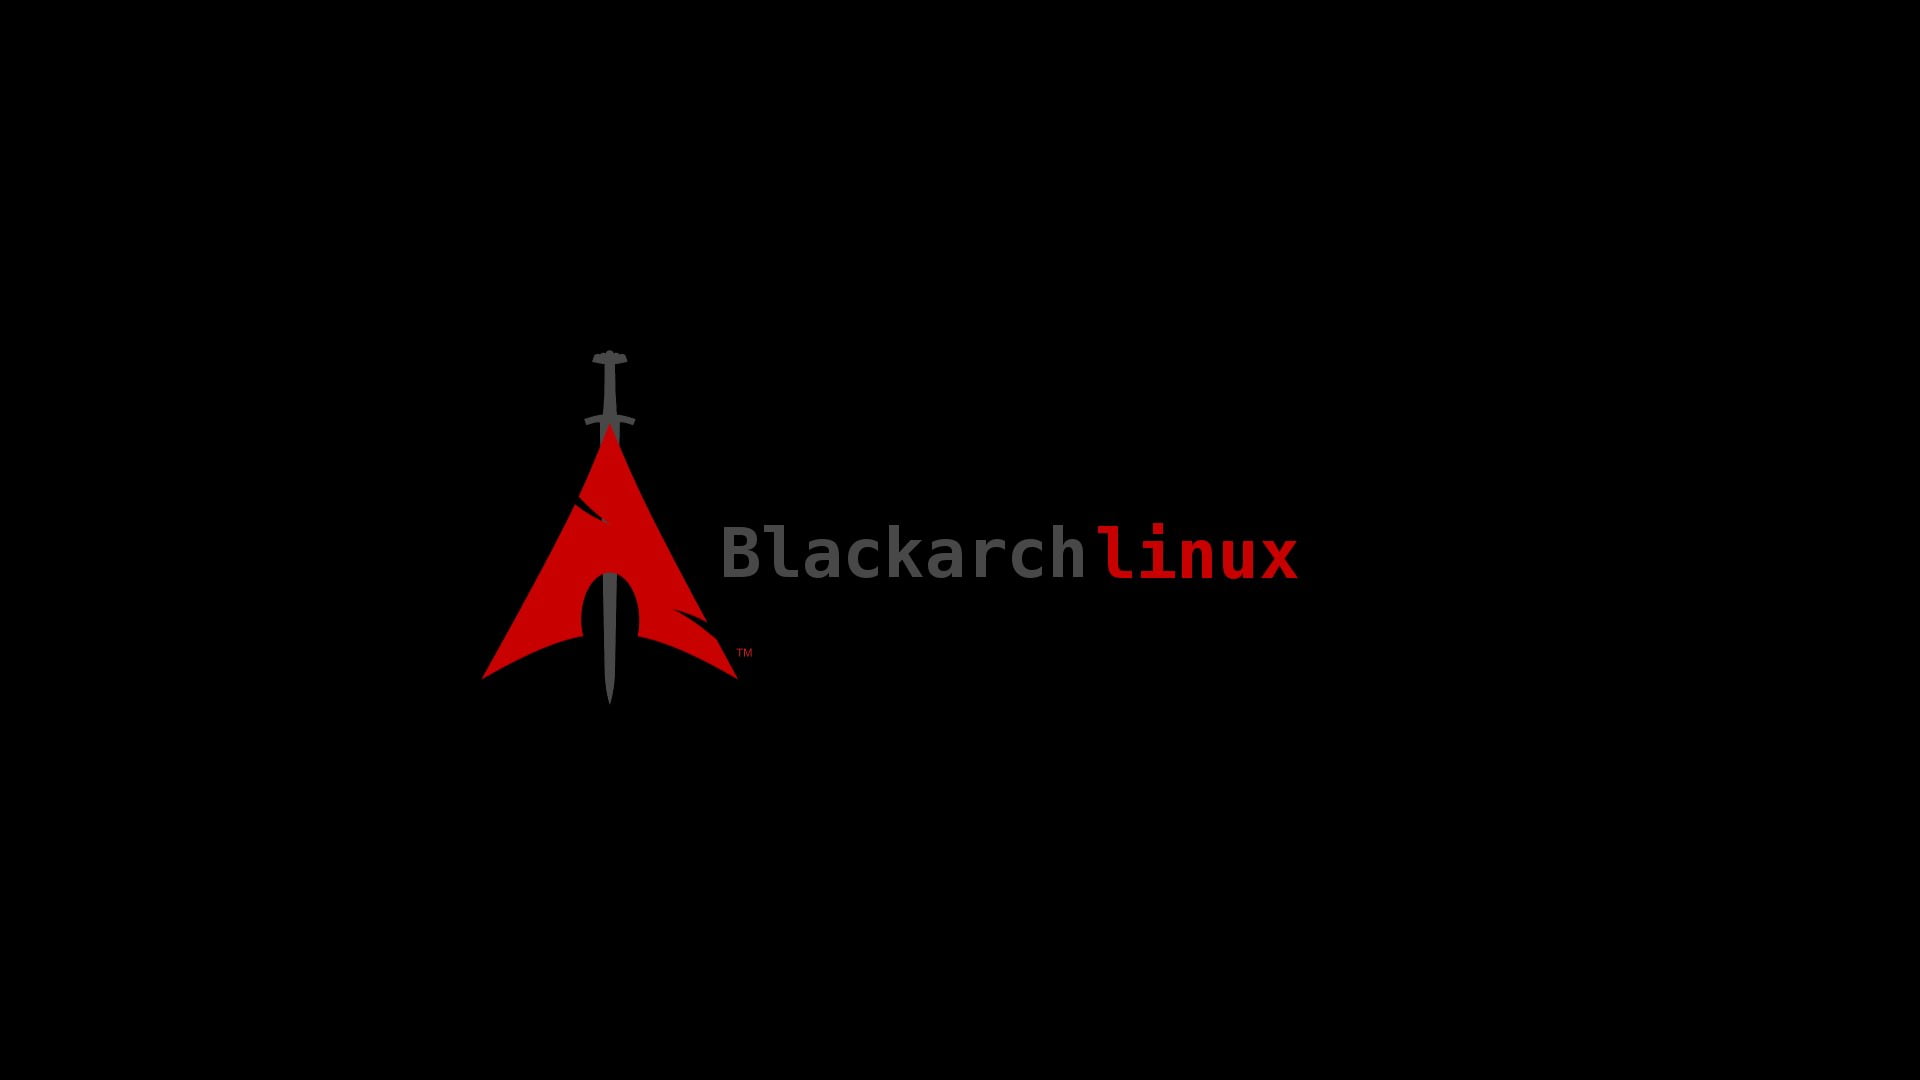 Альтернативы Kali Linux: дистрибутивы для новичков на основе Arch Linux — Manjaro и BlackArch